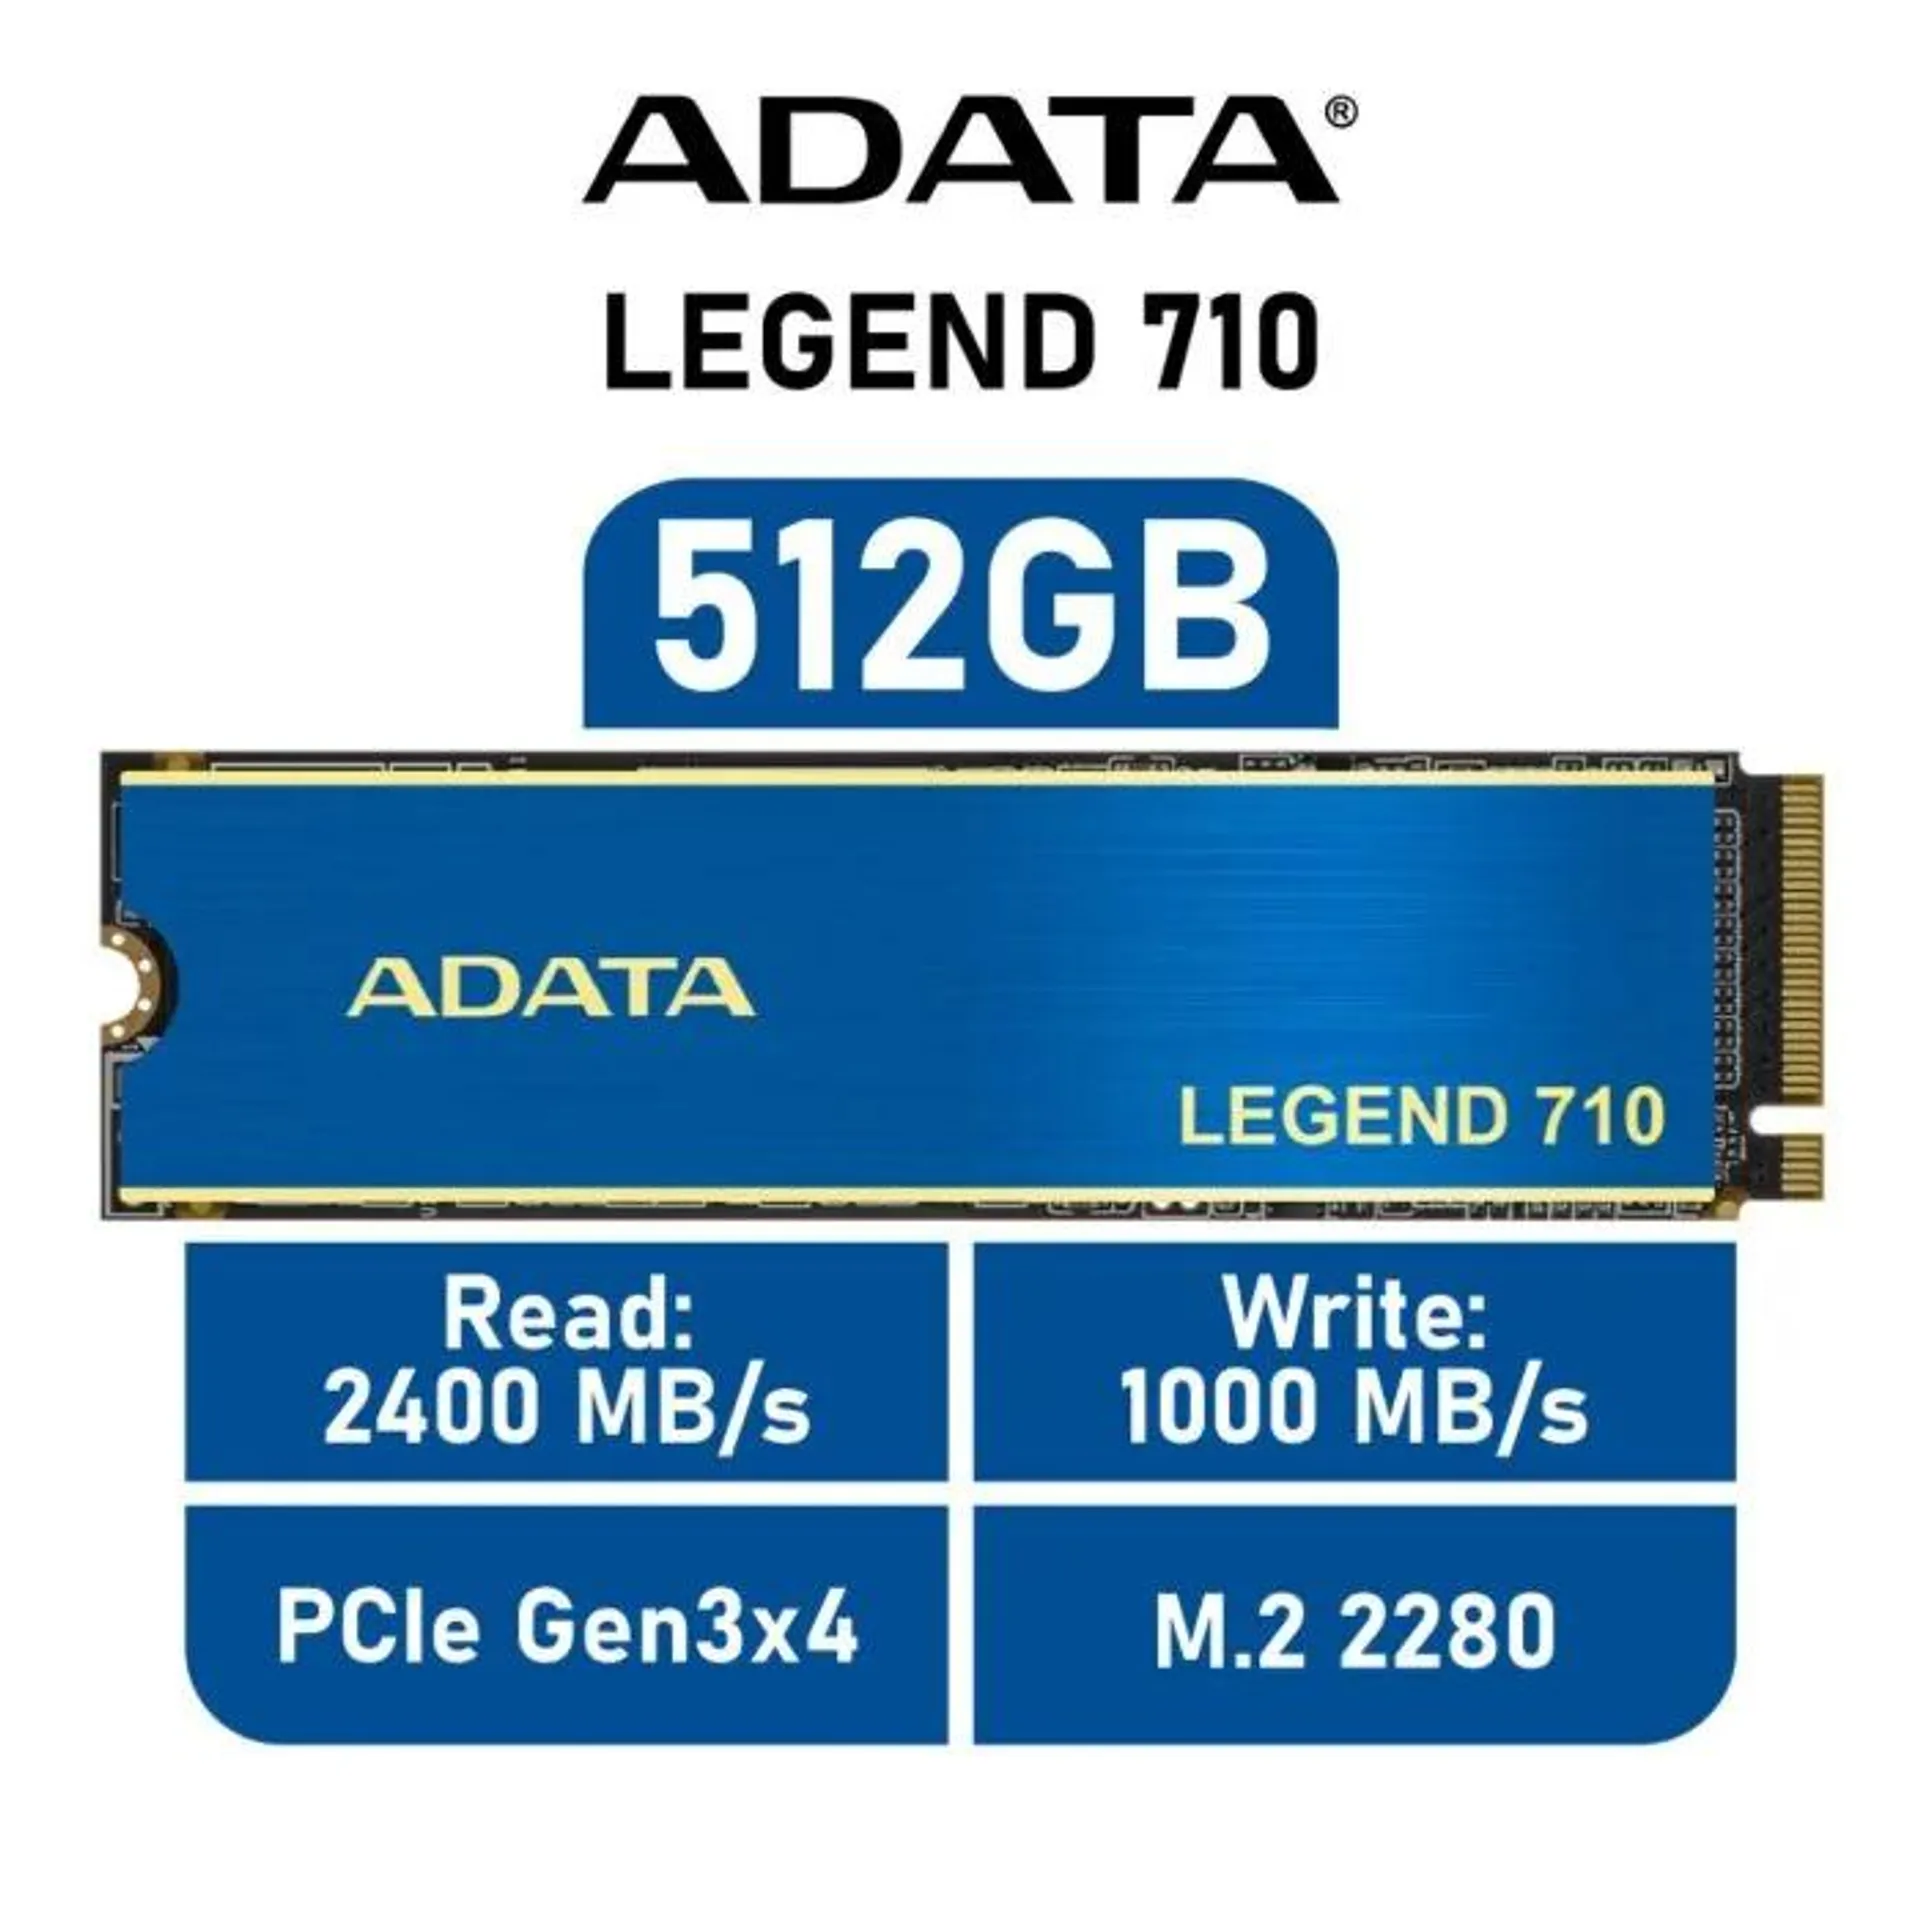 ADATA LEGEND 710 512GB PCIe Gen3x4 ALEG-710-512GCS M.2 2280 Solid State Drive